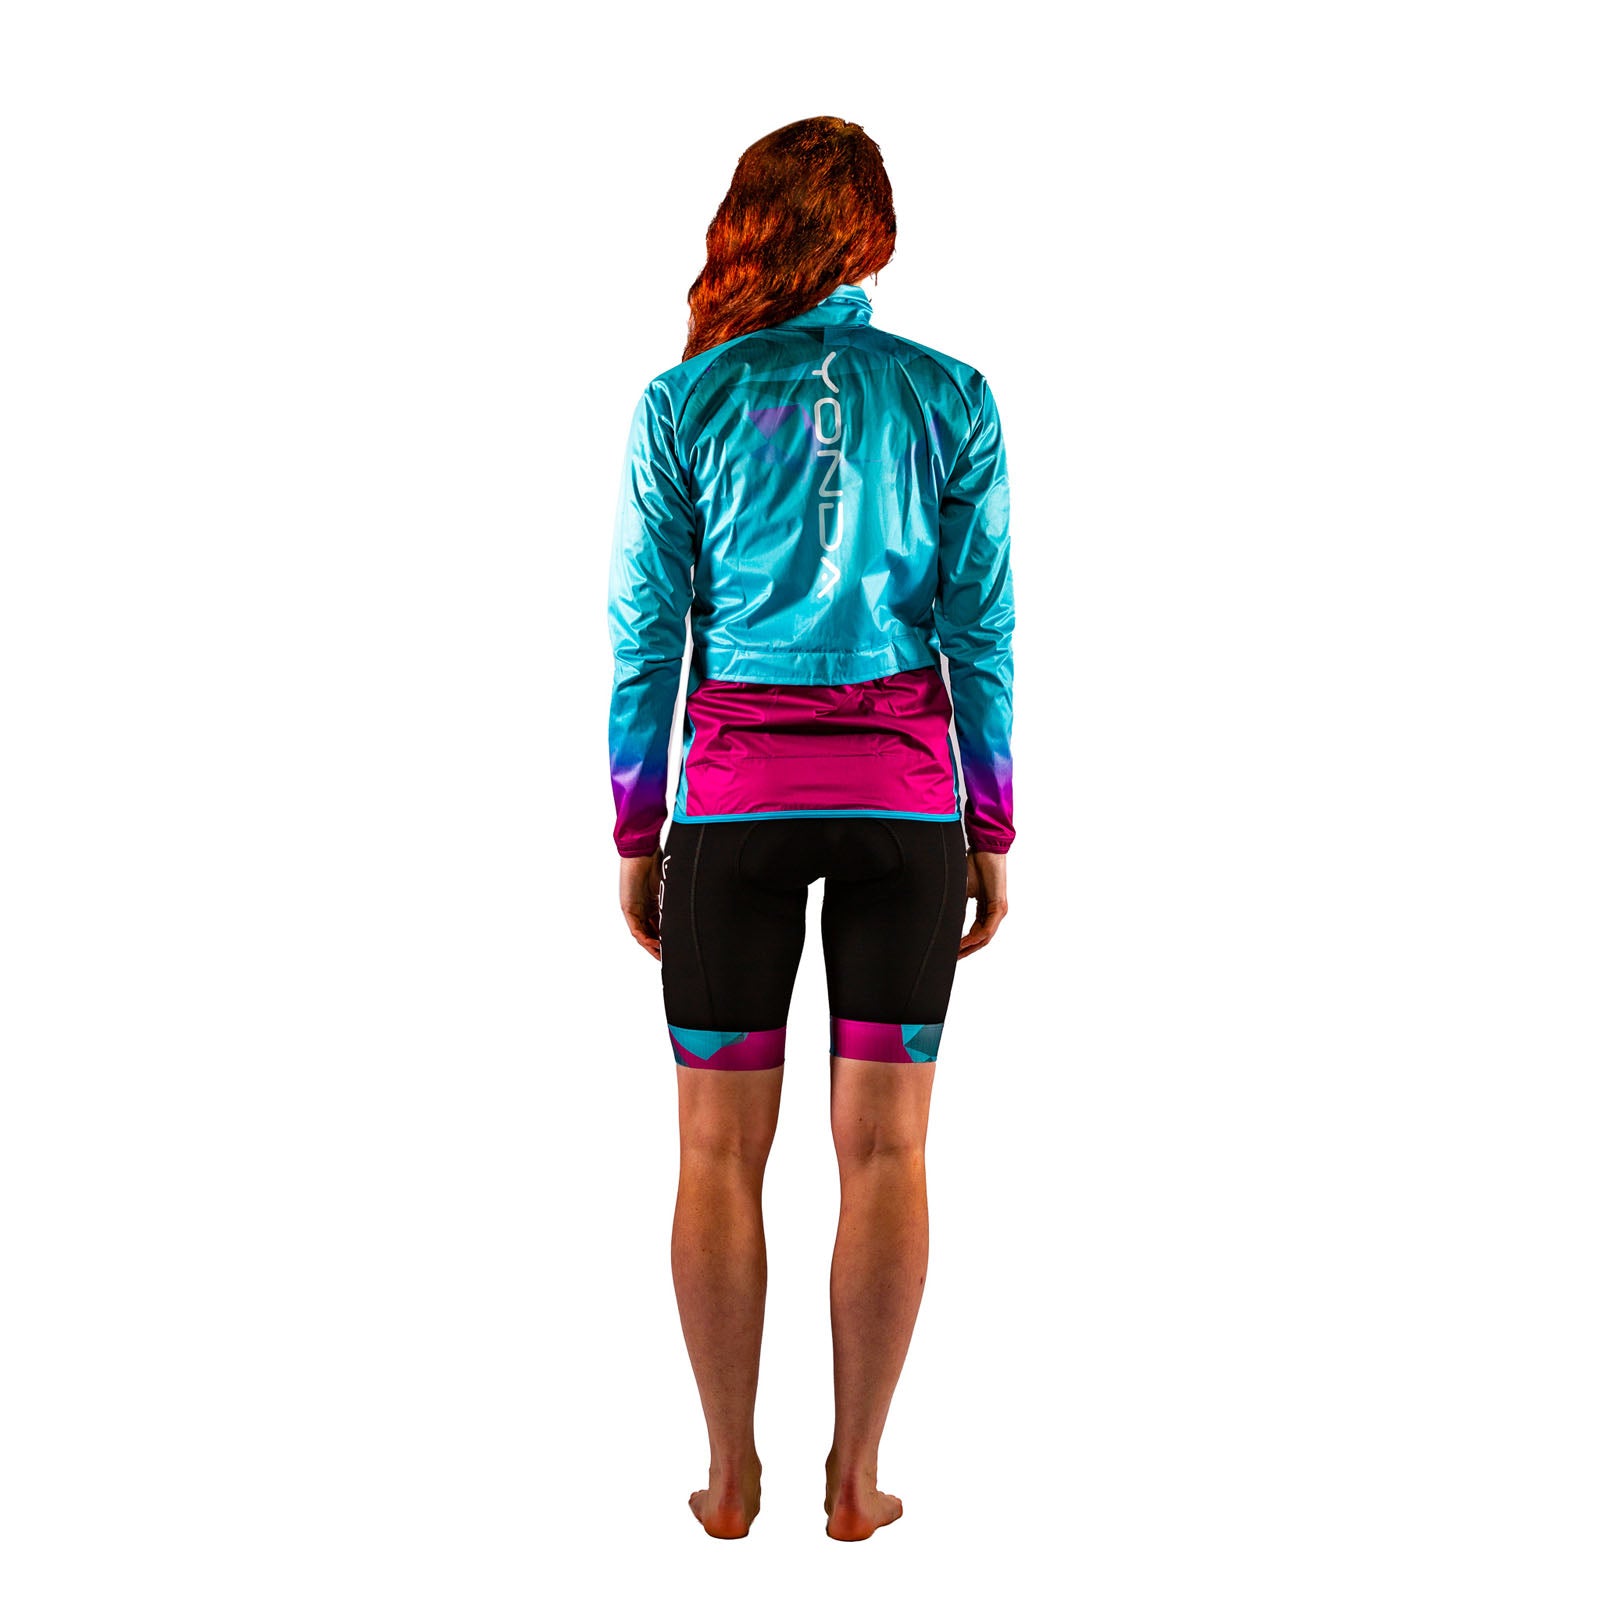 Astratto blu multisport jacket & Astratto blu bib shorts female4